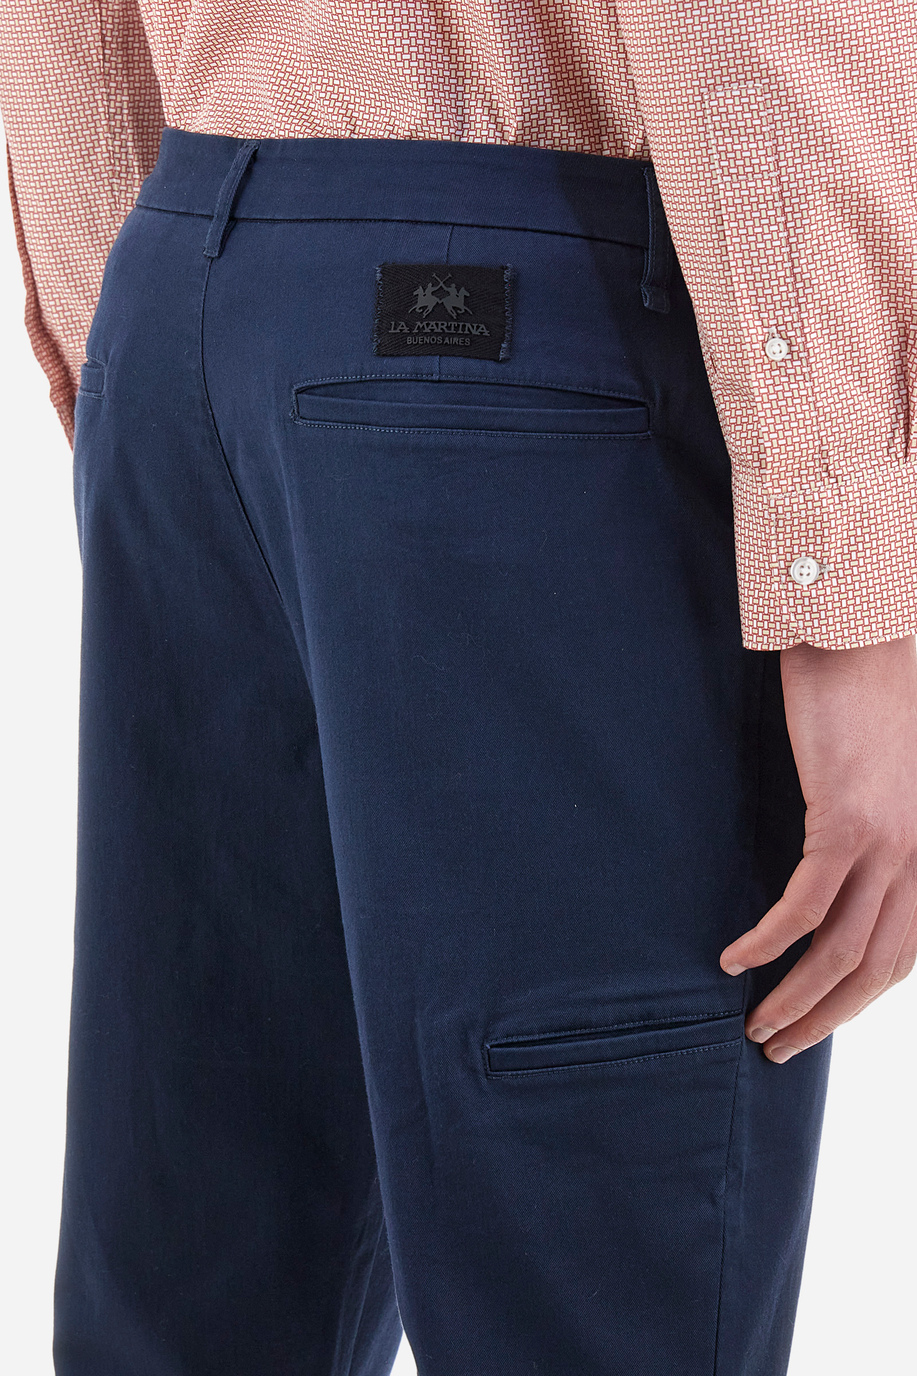 Pantalone chino da uomo regular fit - Yirmeyahu - Pantaloni | La Martina - Official Online Shop